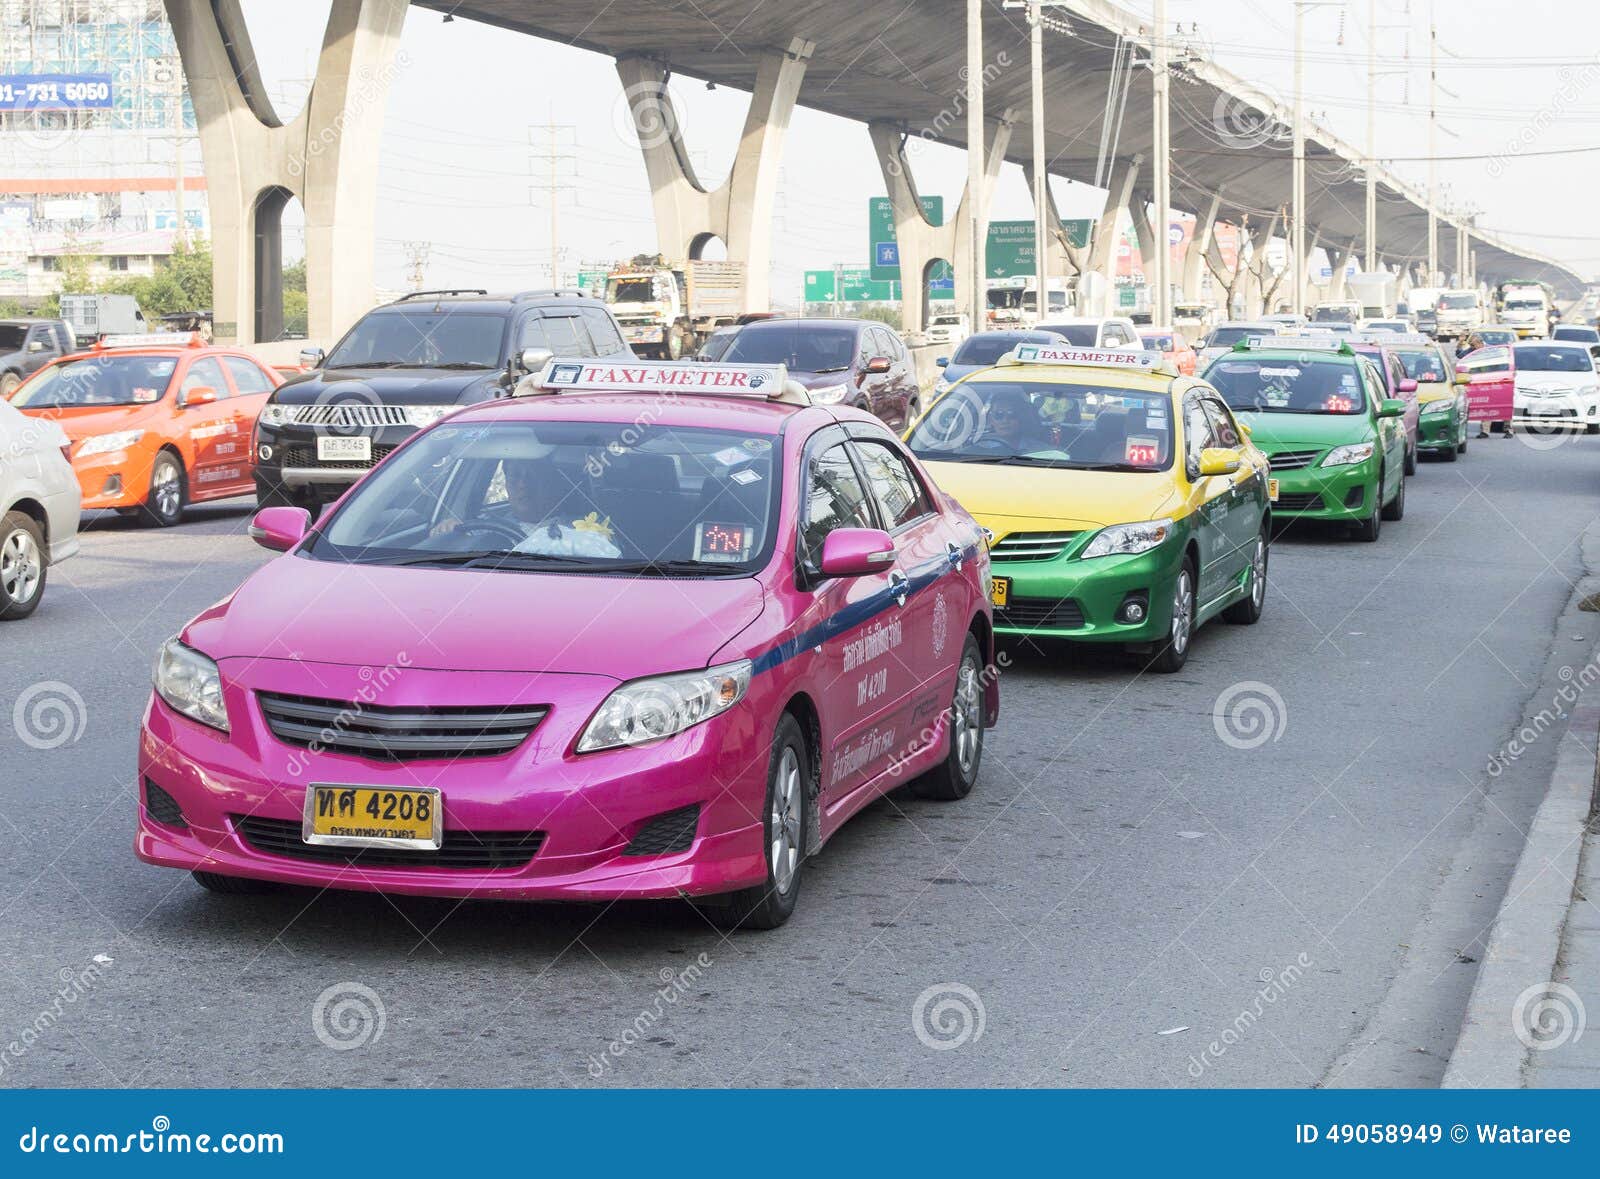 Такси тайцы. Такси в Тайланде. Camry такси Суварнабхуми. Такси в Тайцах.